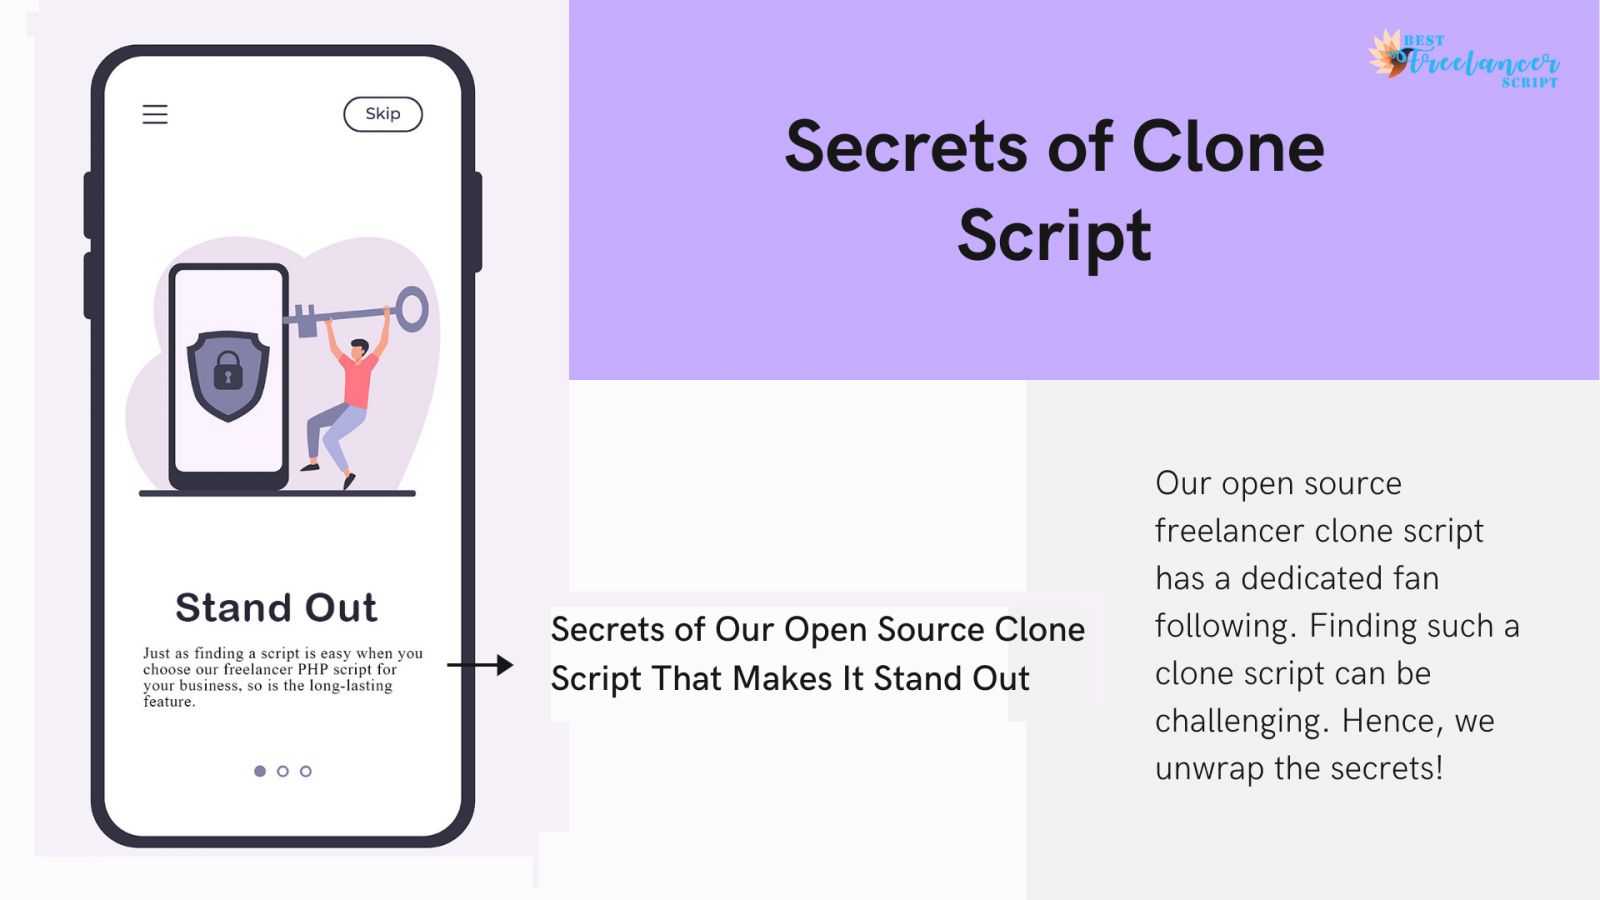 Open source freelancer clone script